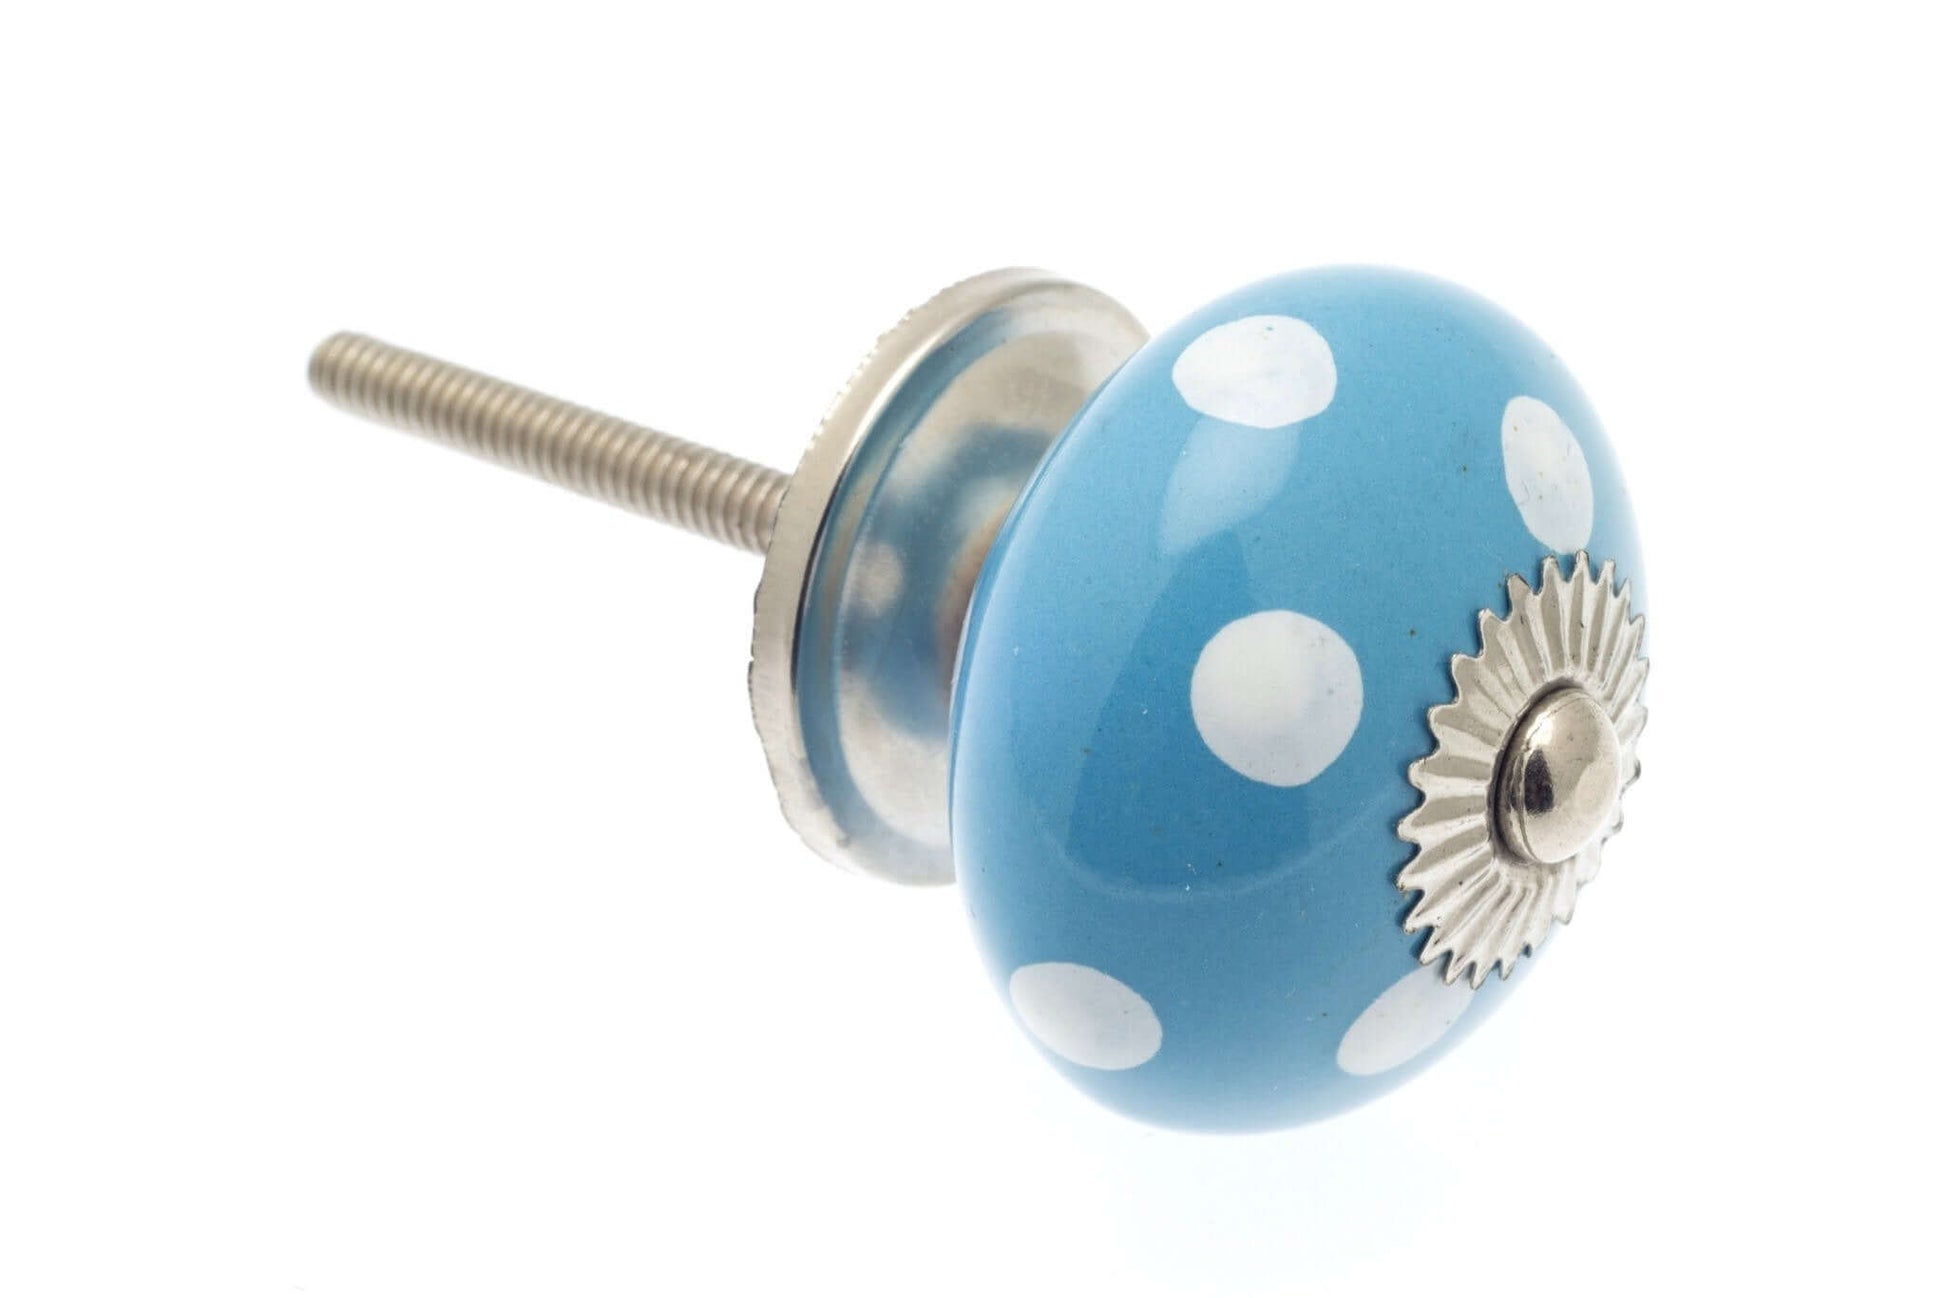 Ceramic Cupboard Knobs - Round Ceramic Knob Blue With White Spots / Polka Dots 40mm (MT-019)